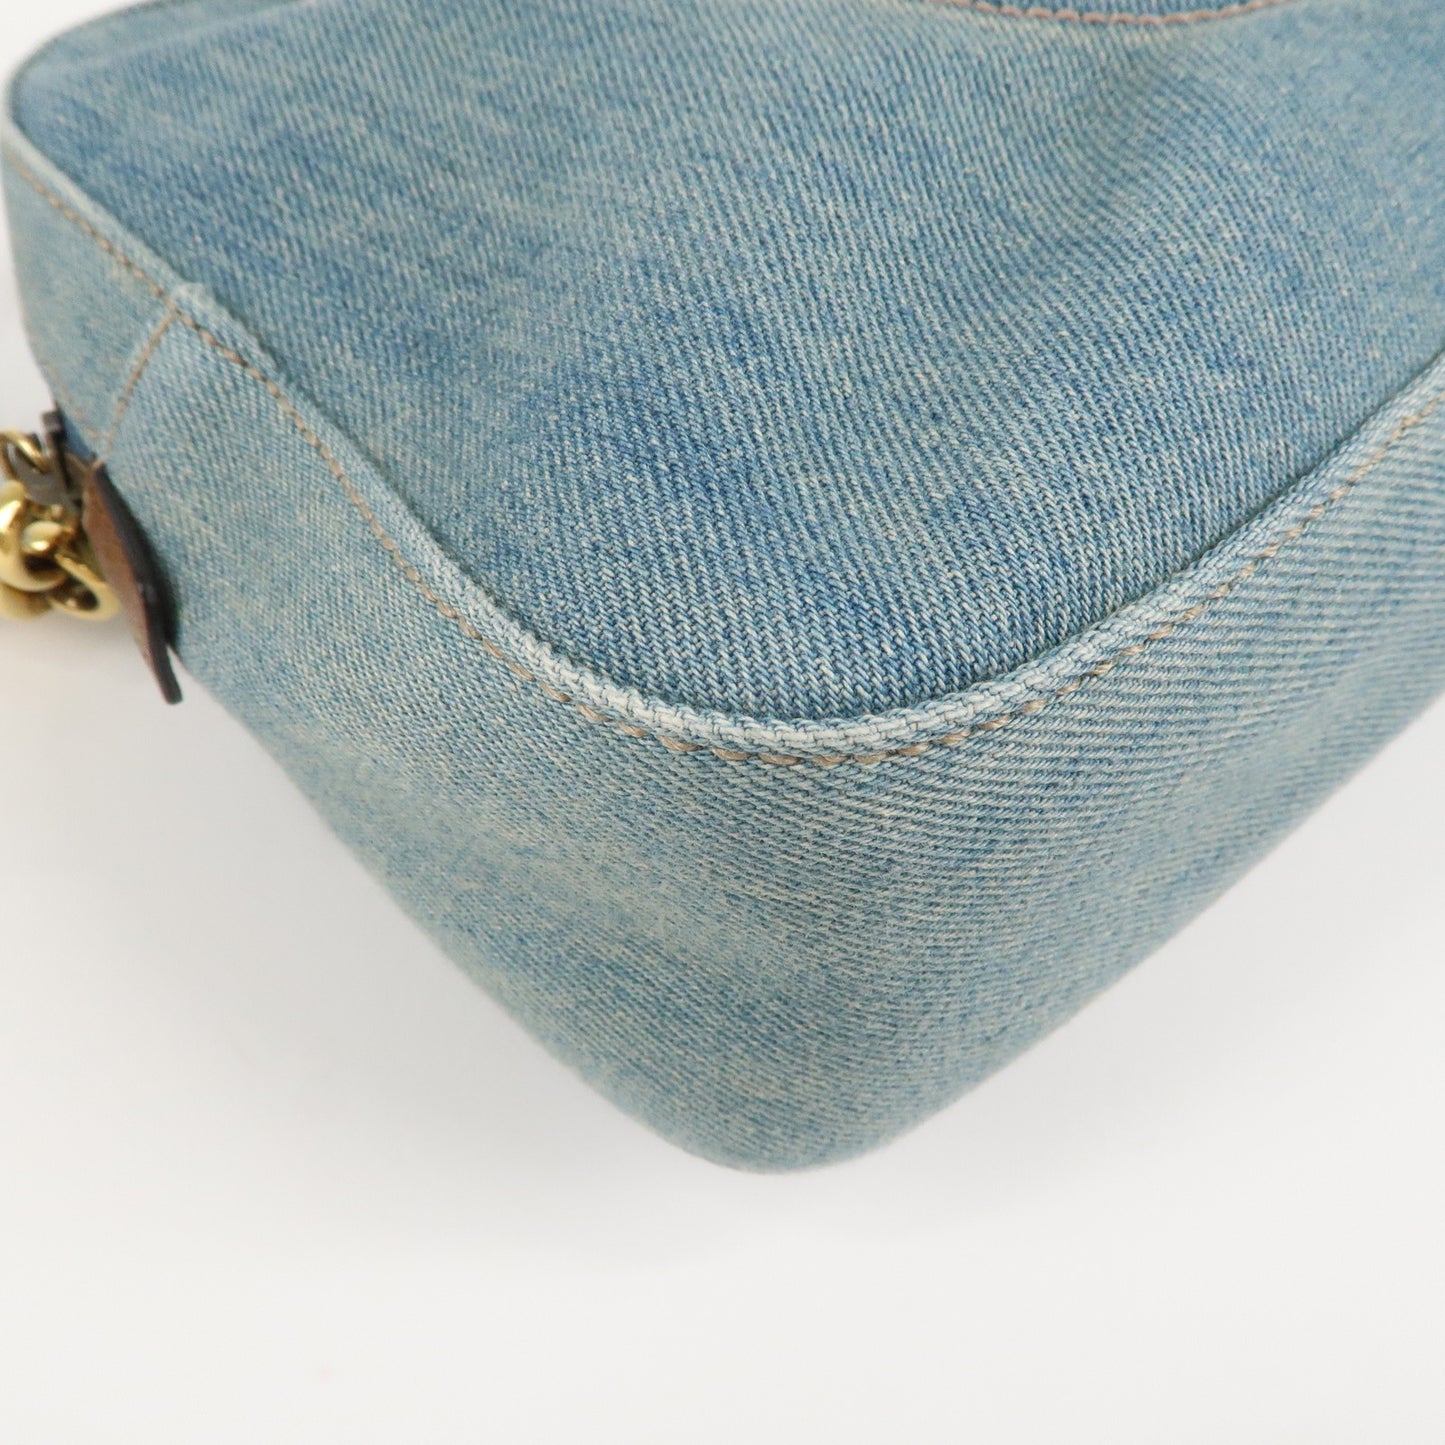 GUCCI SOHO Interlocking G Denim Leather Chain Shoulder Bag 308988